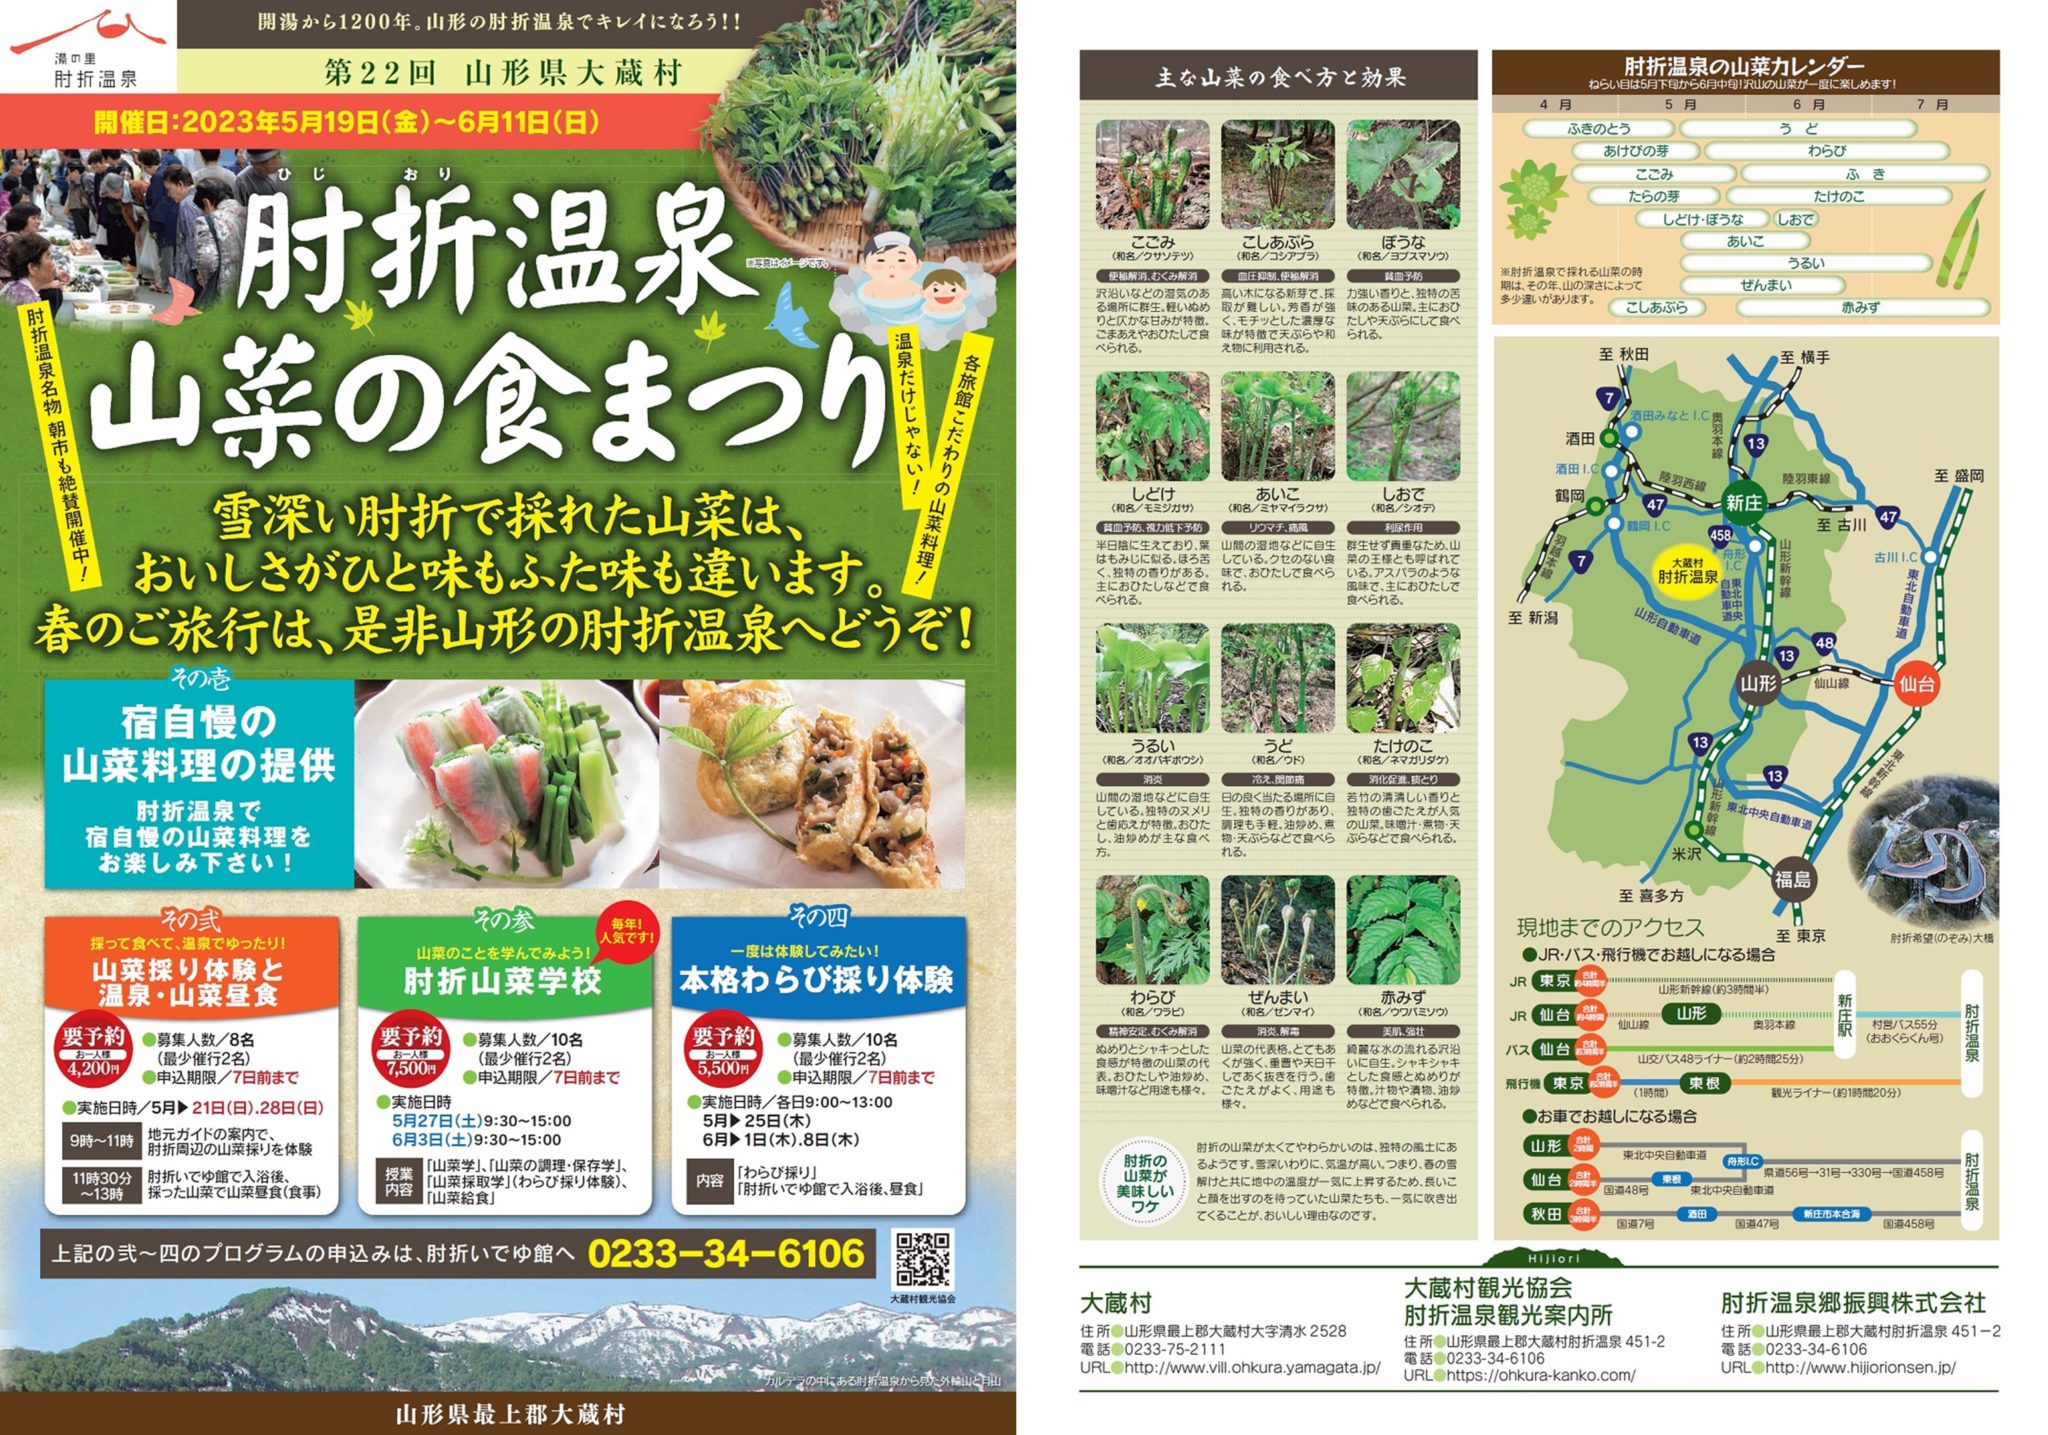 Hijiori Onsen Mountain Vegetable Festival